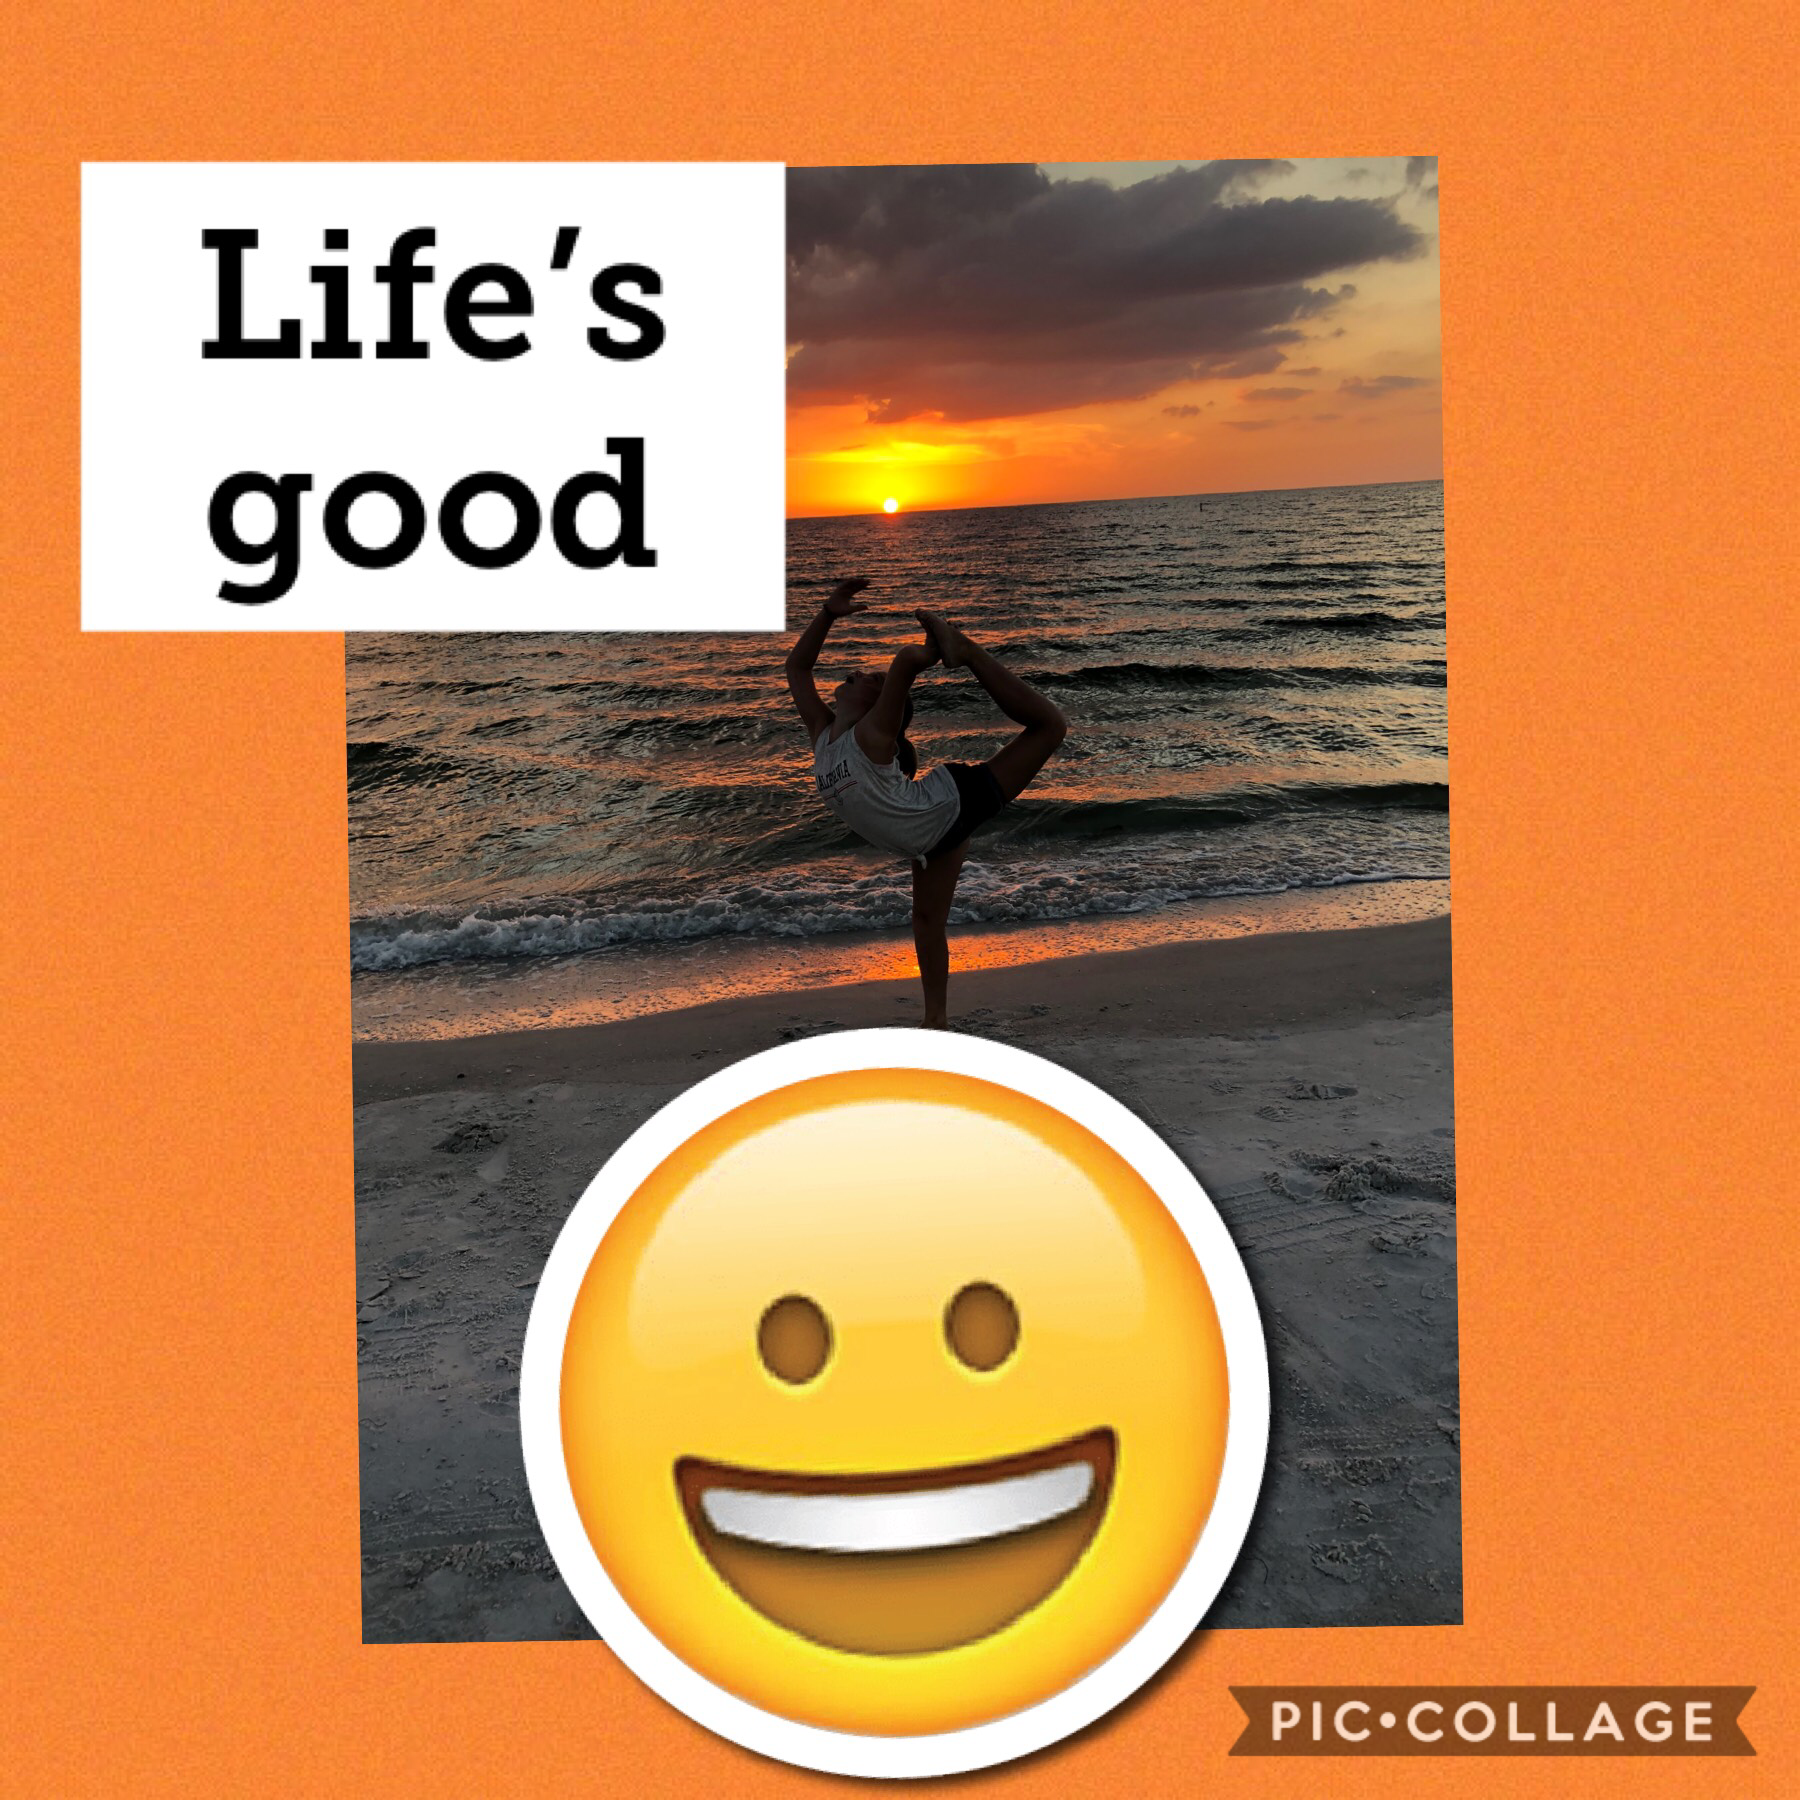 Life’s good